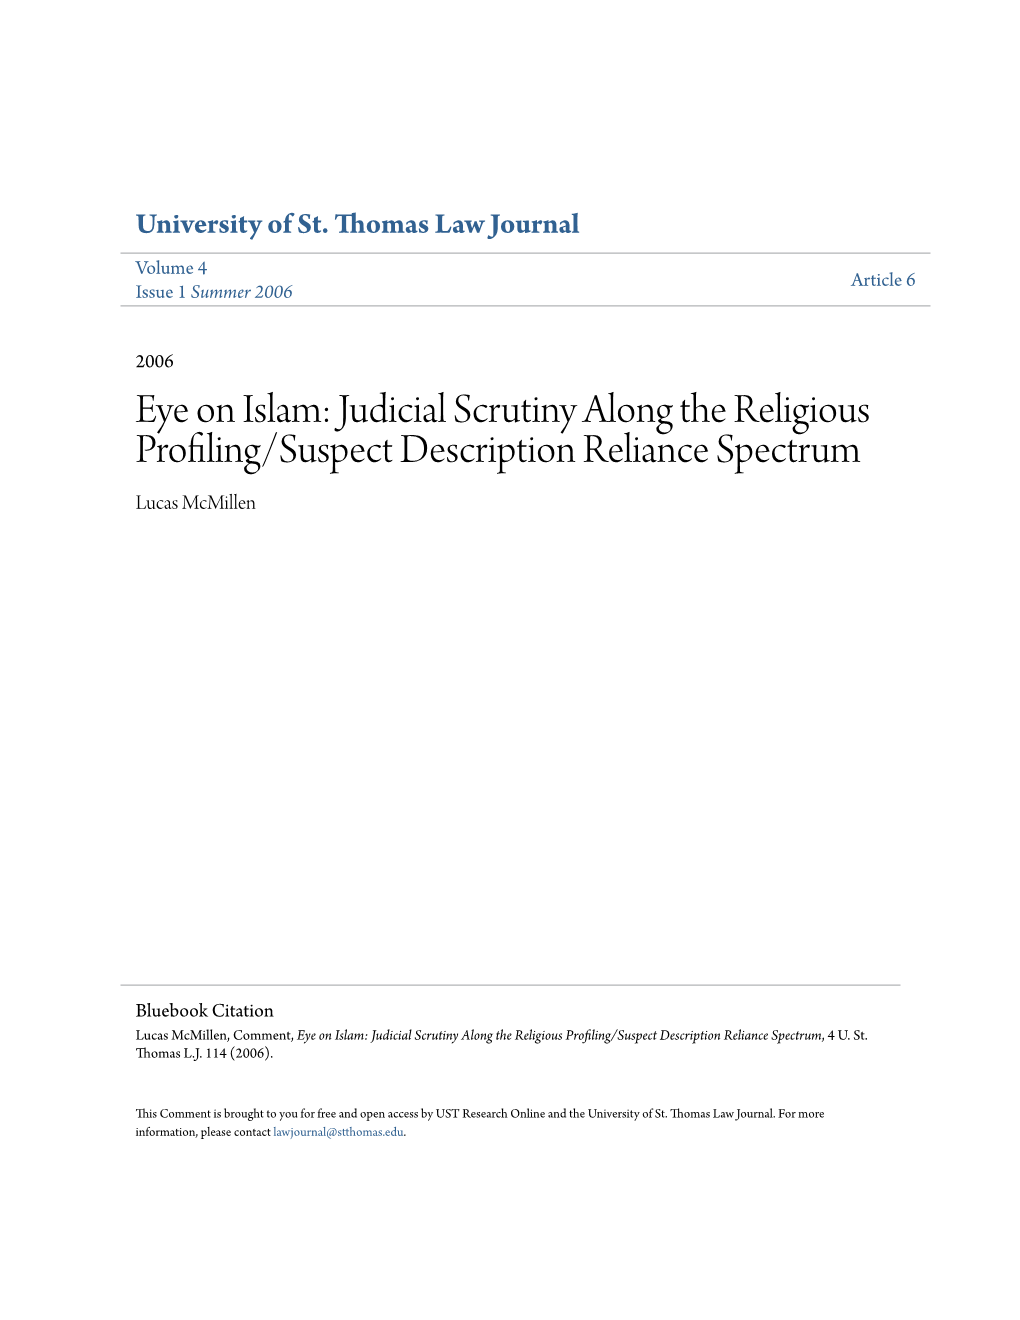 Eye on Islam: Judicial Scrutiny Along the Religious Profiling/Suspect Description Reliance Spectrum Lucas Mcmillen